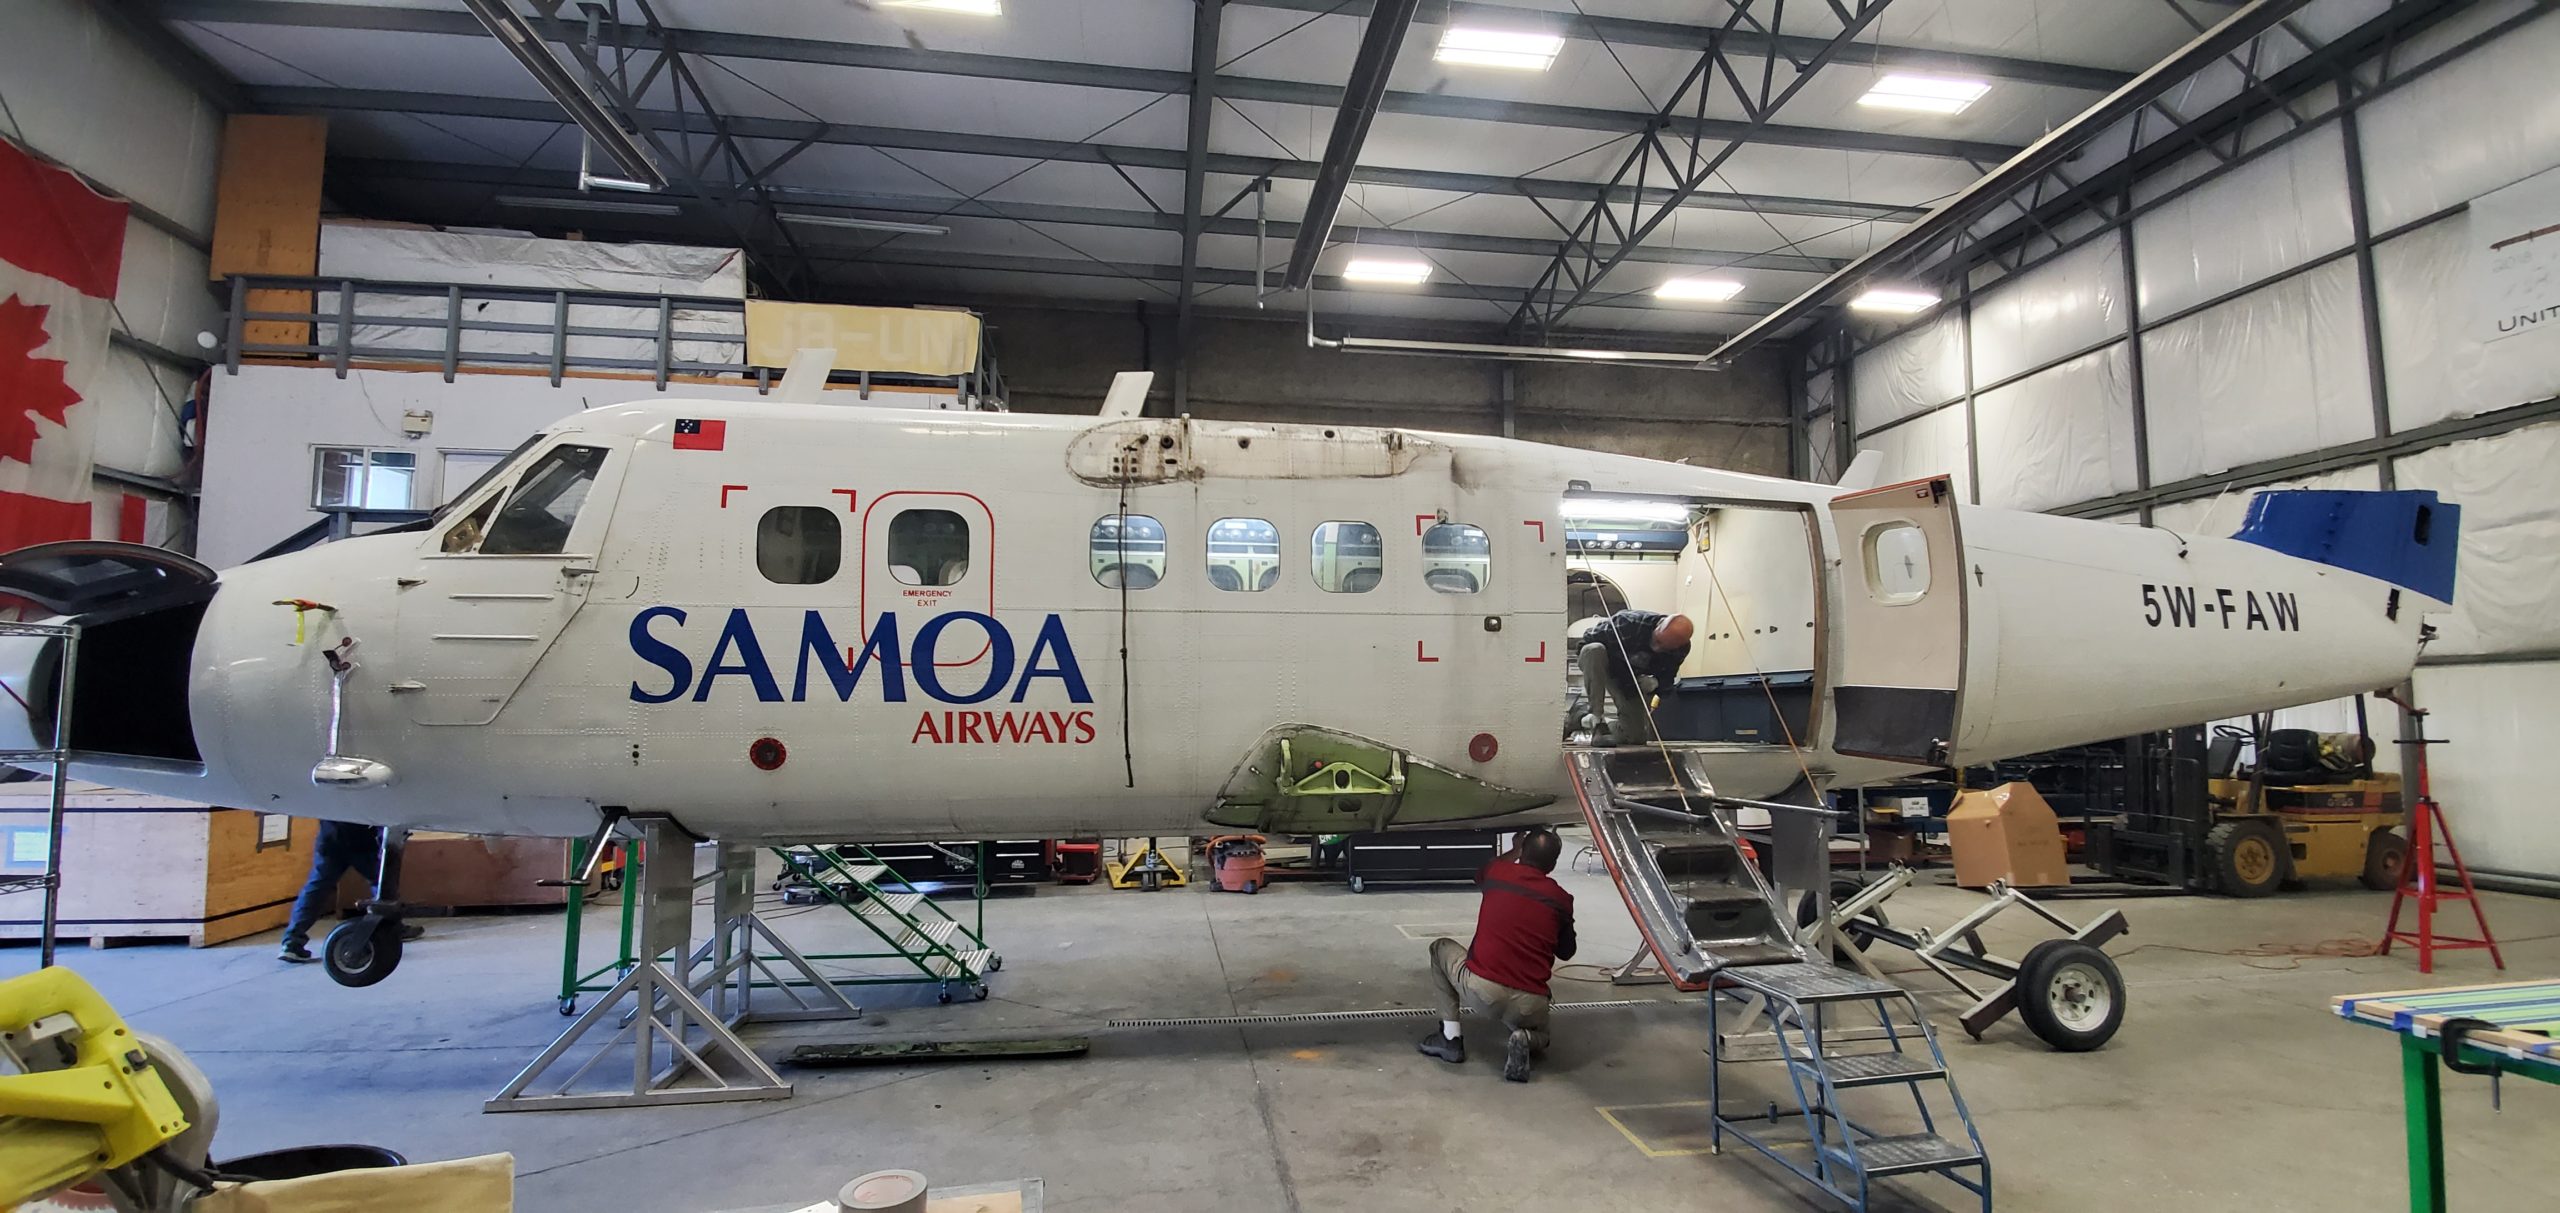 Samoa Airways retrofit project underway in Canada.